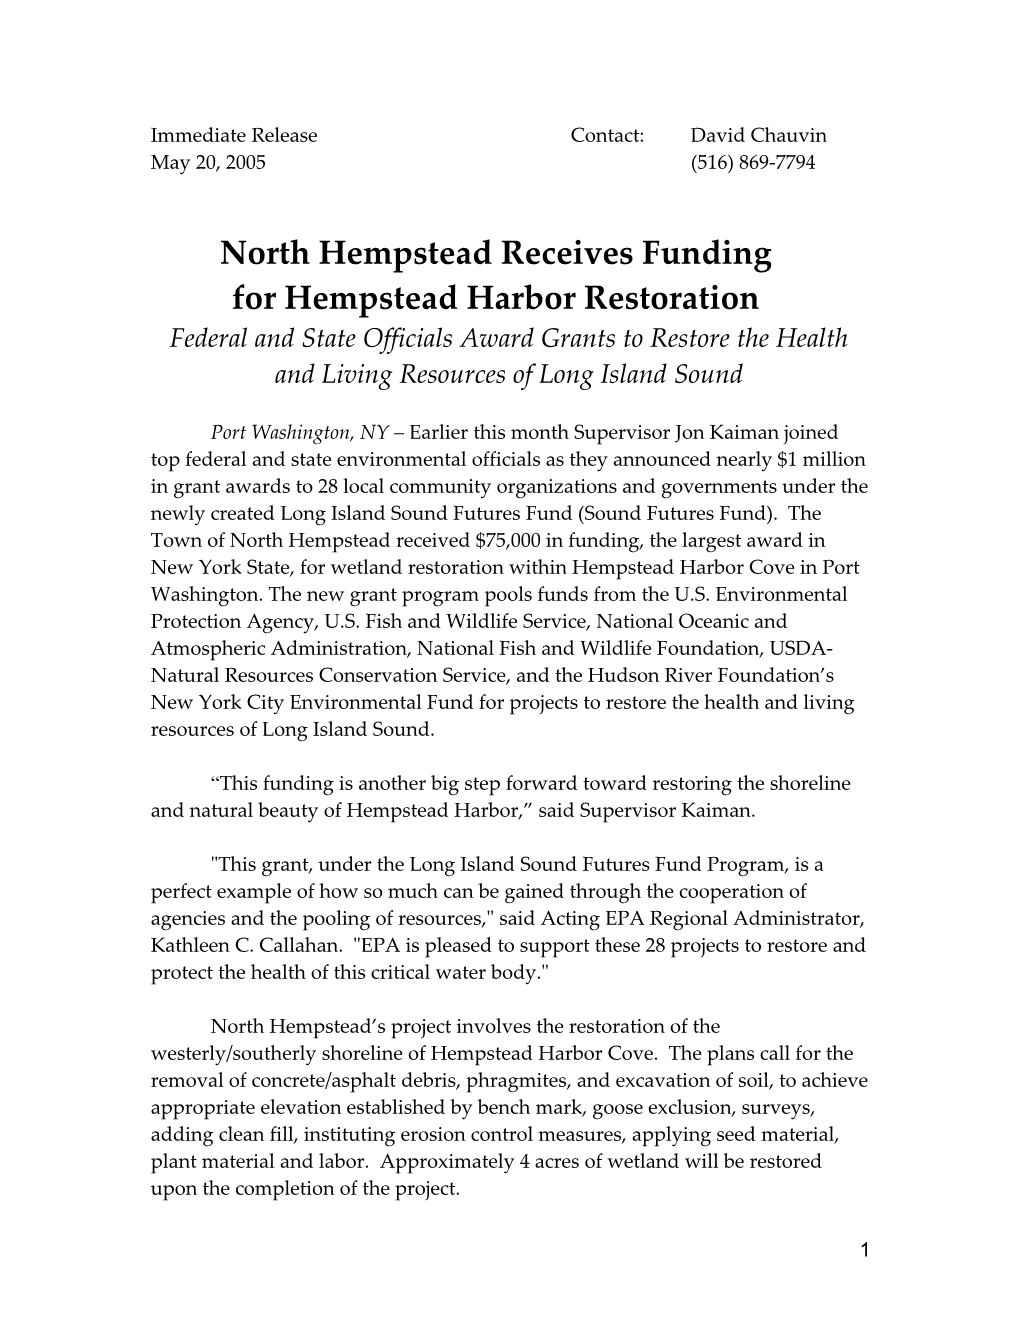 North Hempstead Receives Funding for Hempstead Harbor Restoration